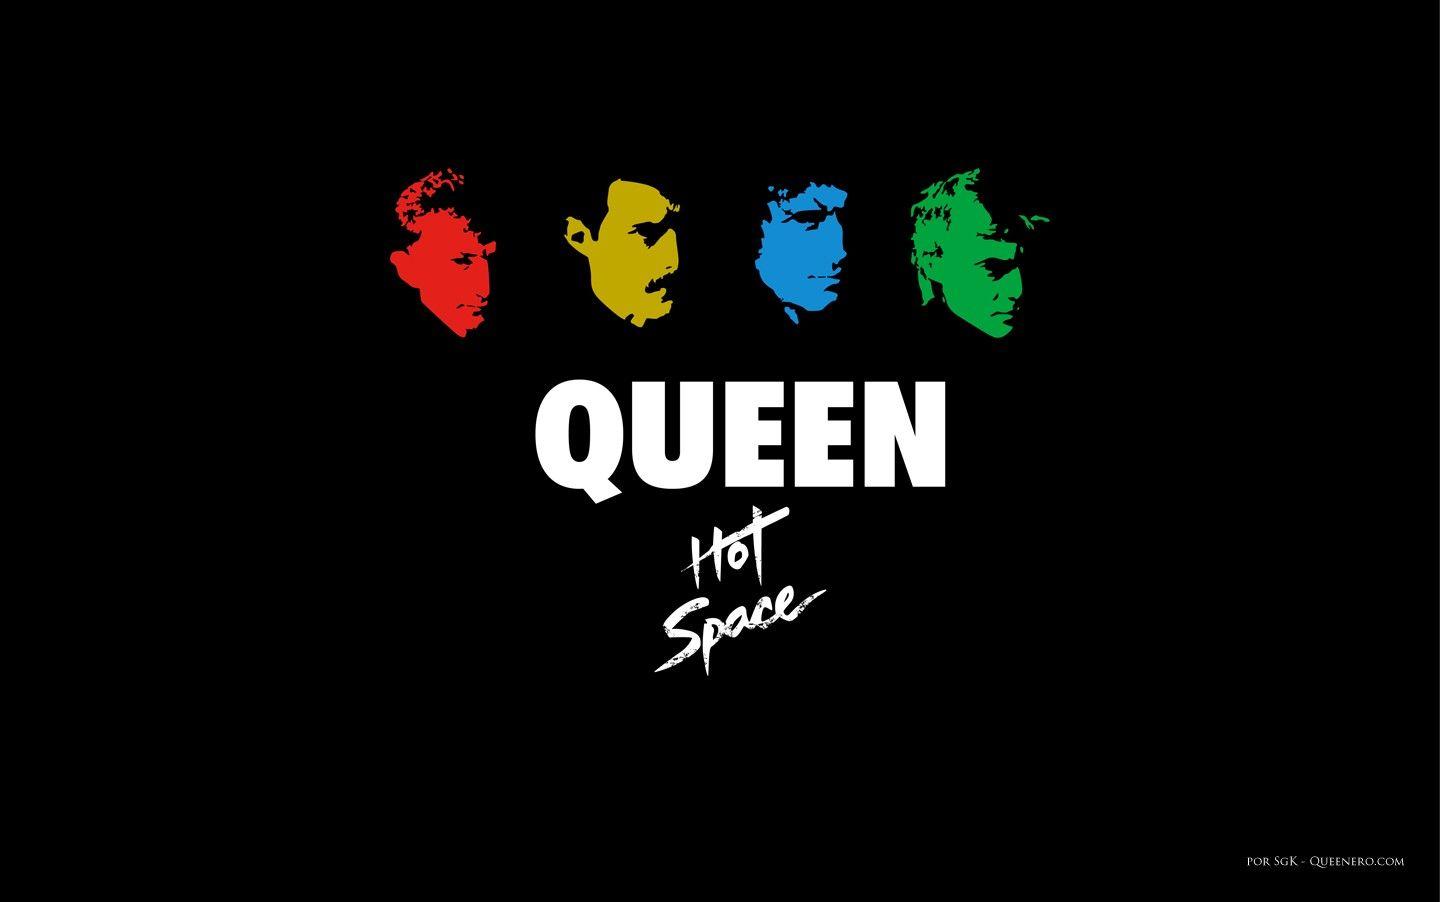 Queen Band Logo Wallpapers Top Free Queen Band Logo Backgrounds Wallpaperaccess